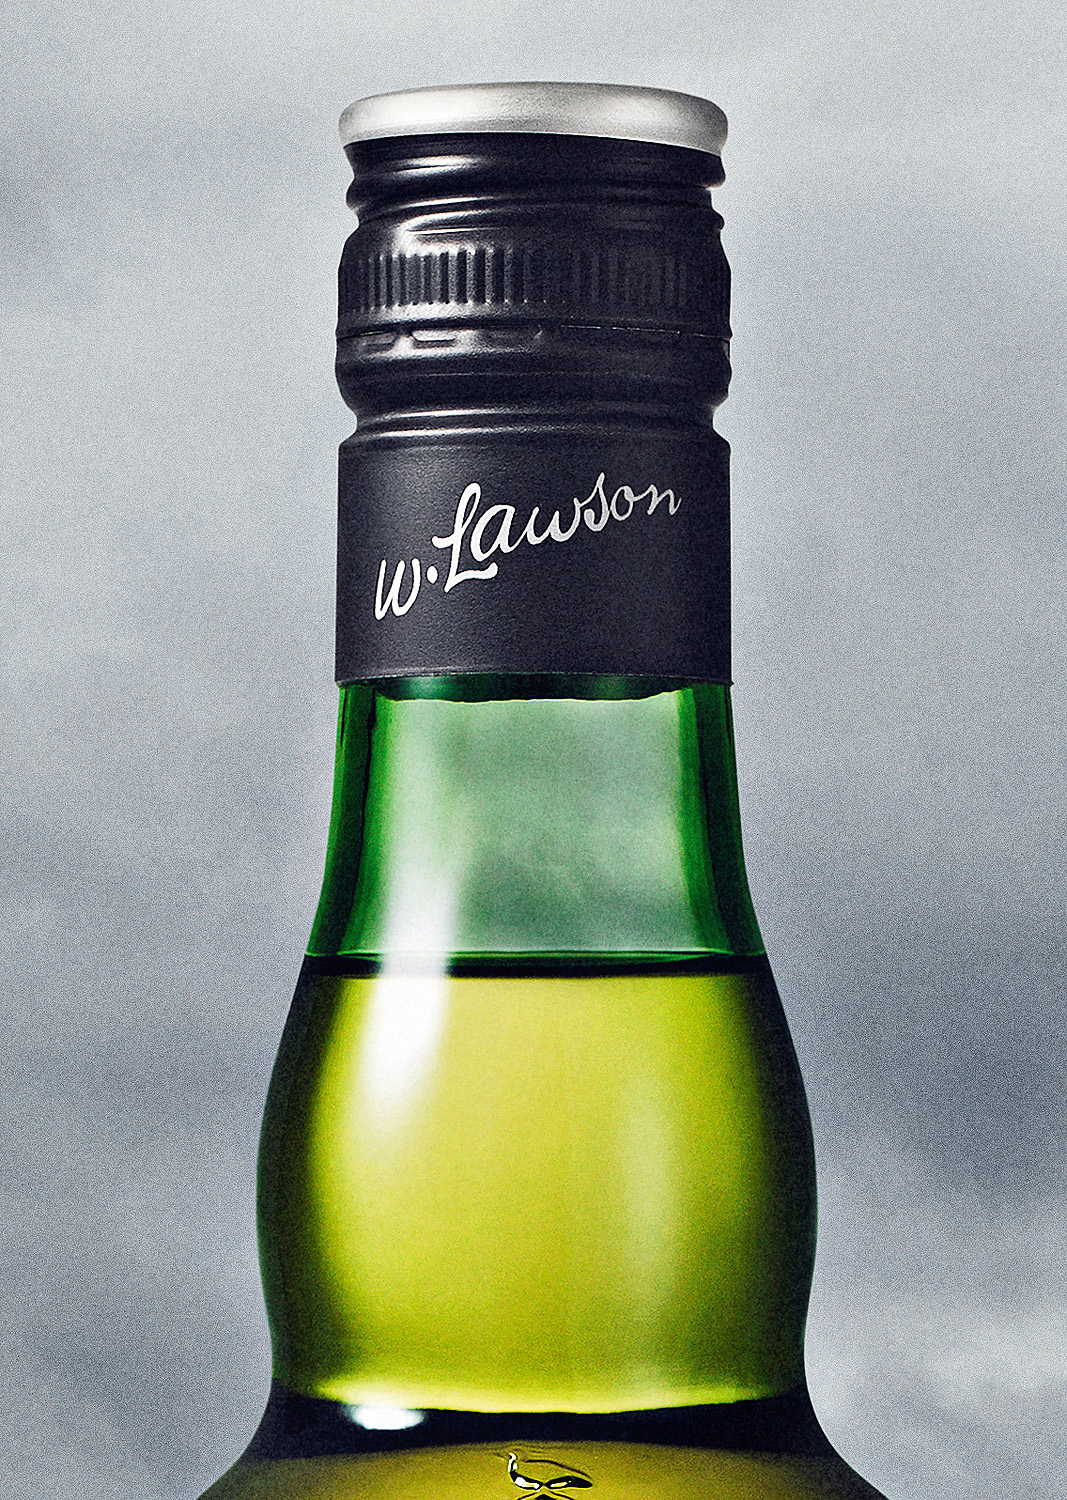 Packshot william lawson's bottle glass fresh ice scotland Highlands Whisky alcool inspire